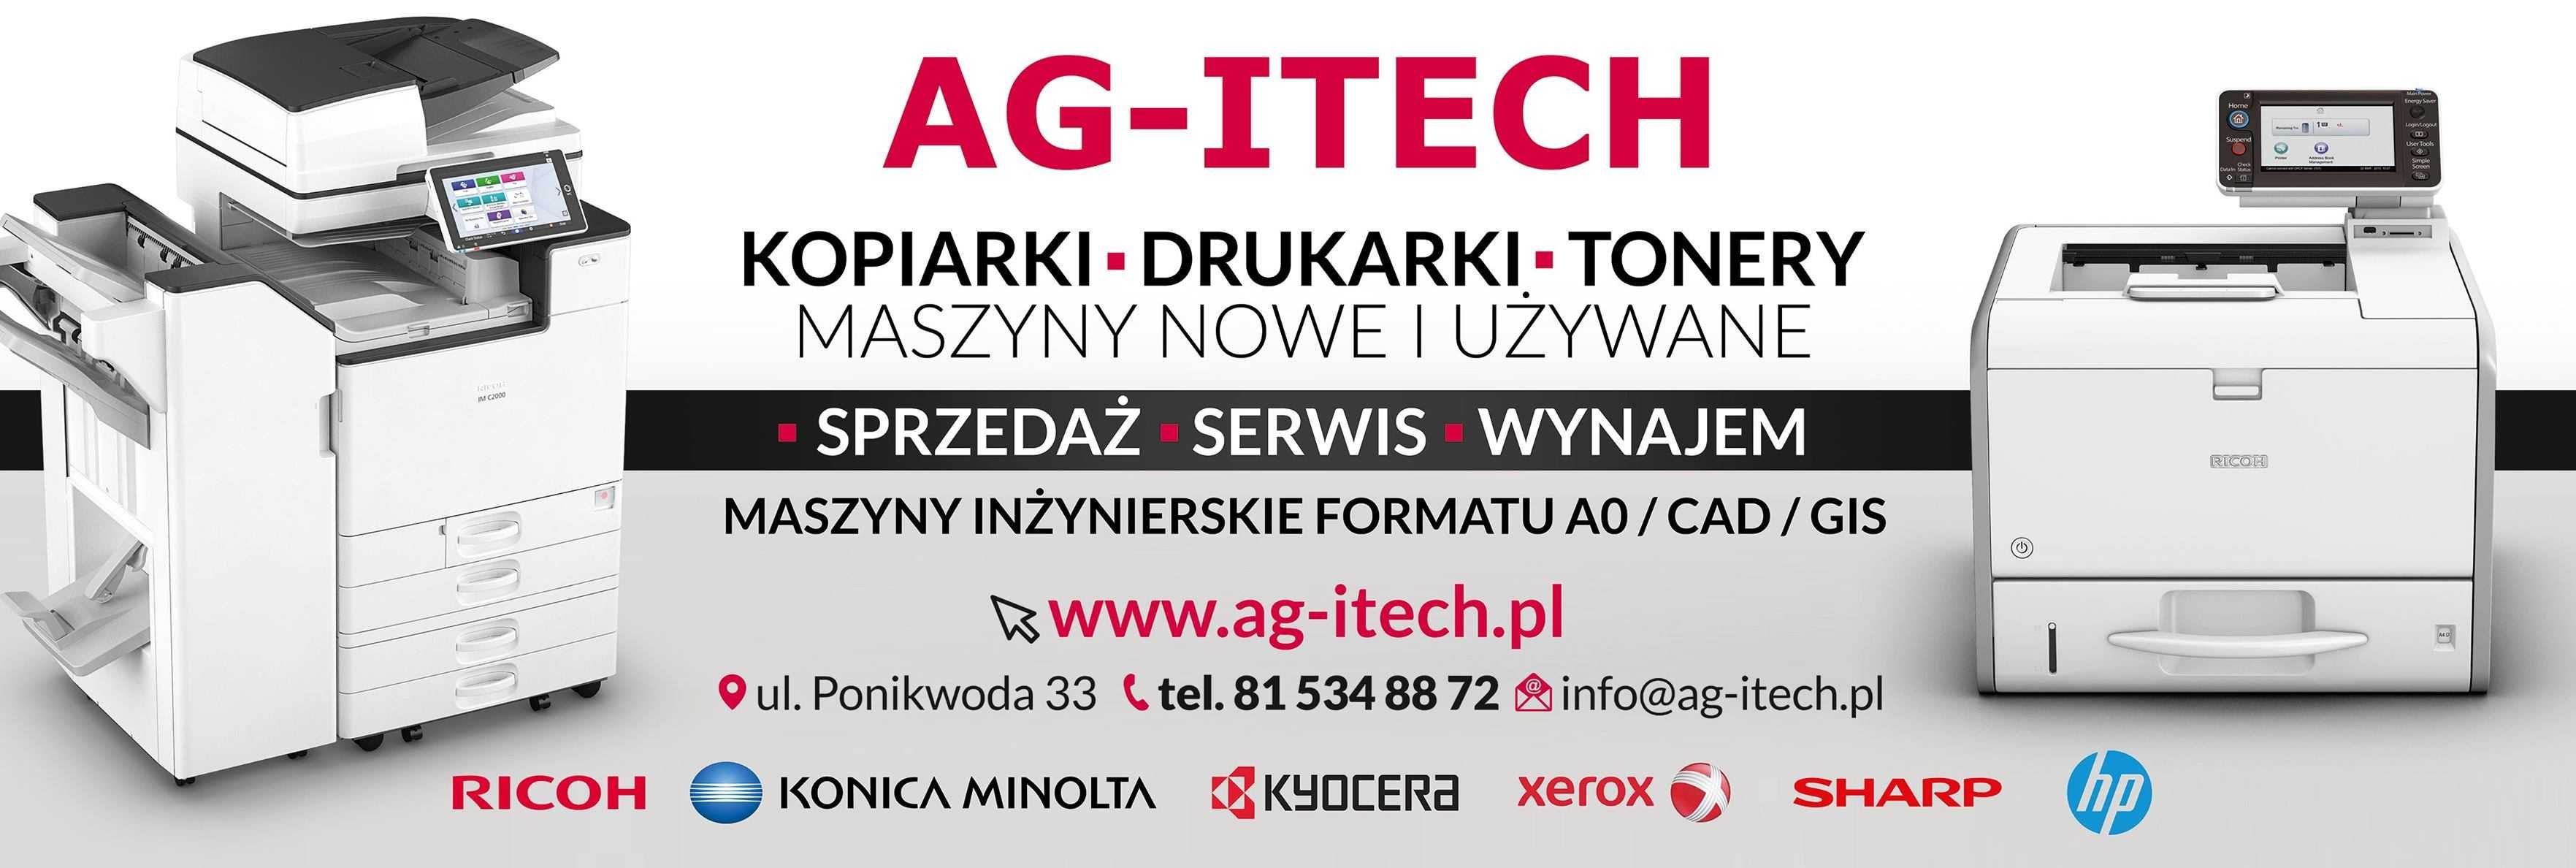 Kserokopiarki drukarki AG-ITECH Lublin Ricoh Xerox Kyocera Minolta